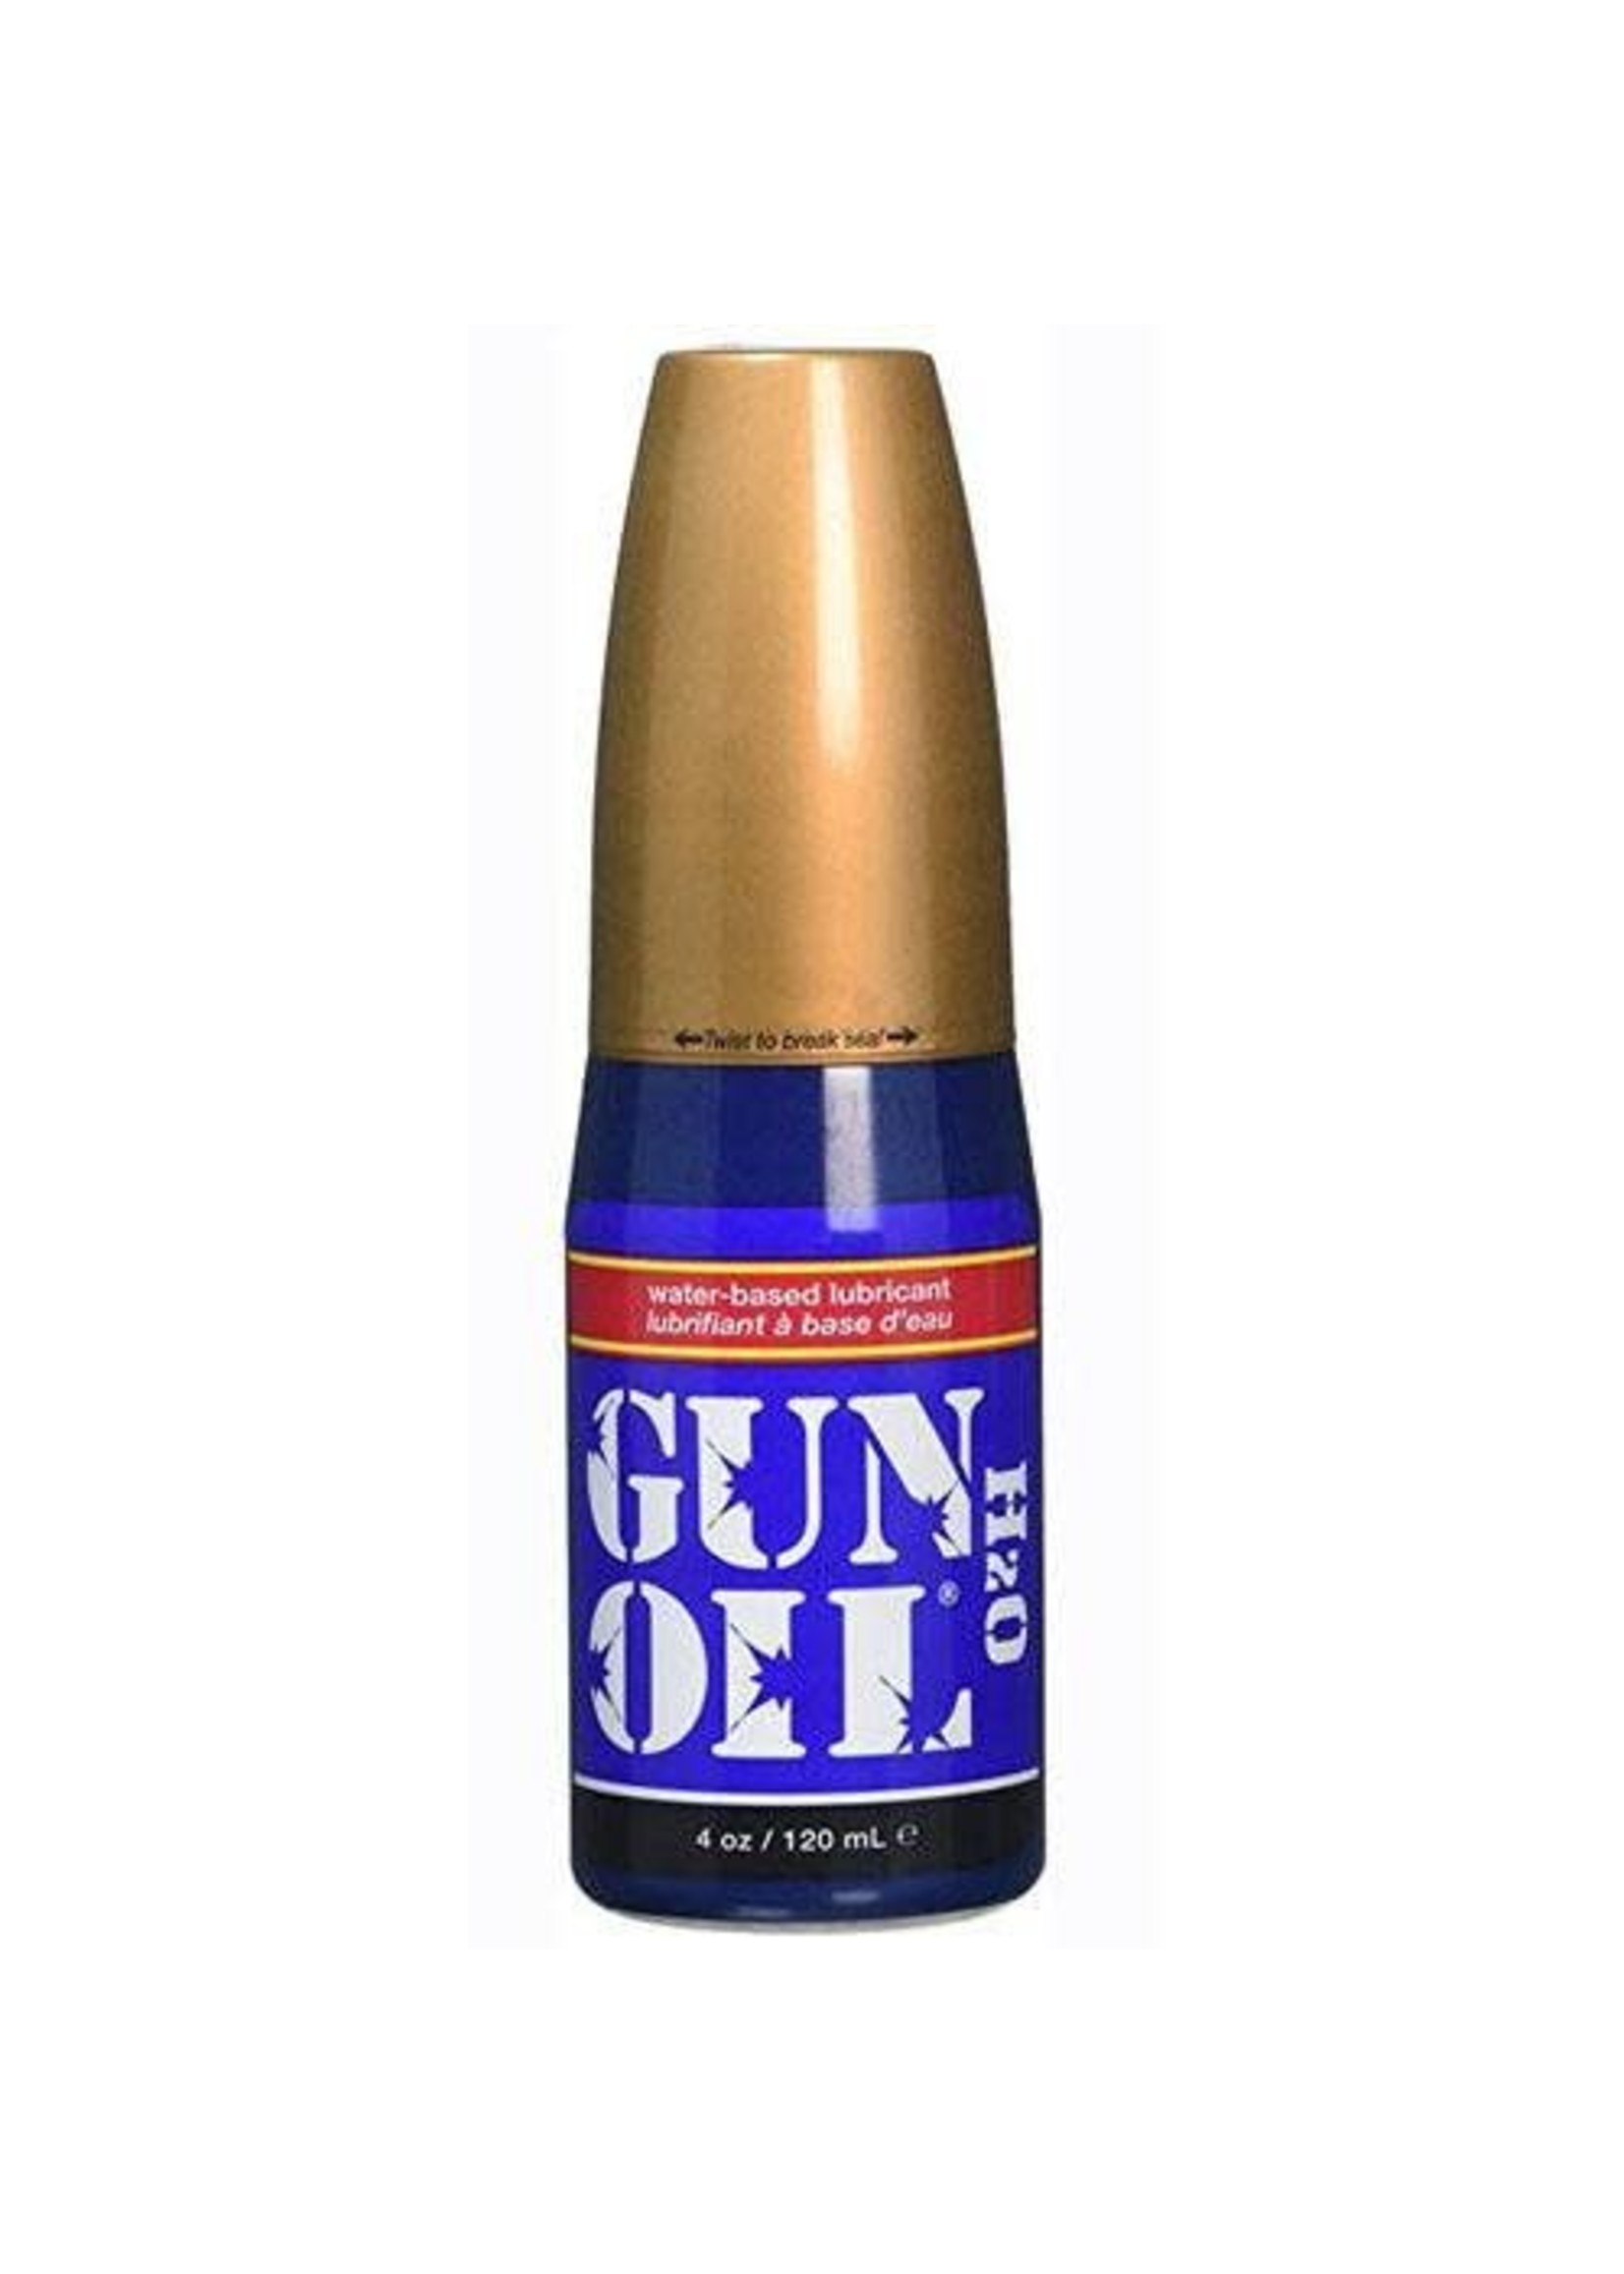 Gun Oil Gun Oil